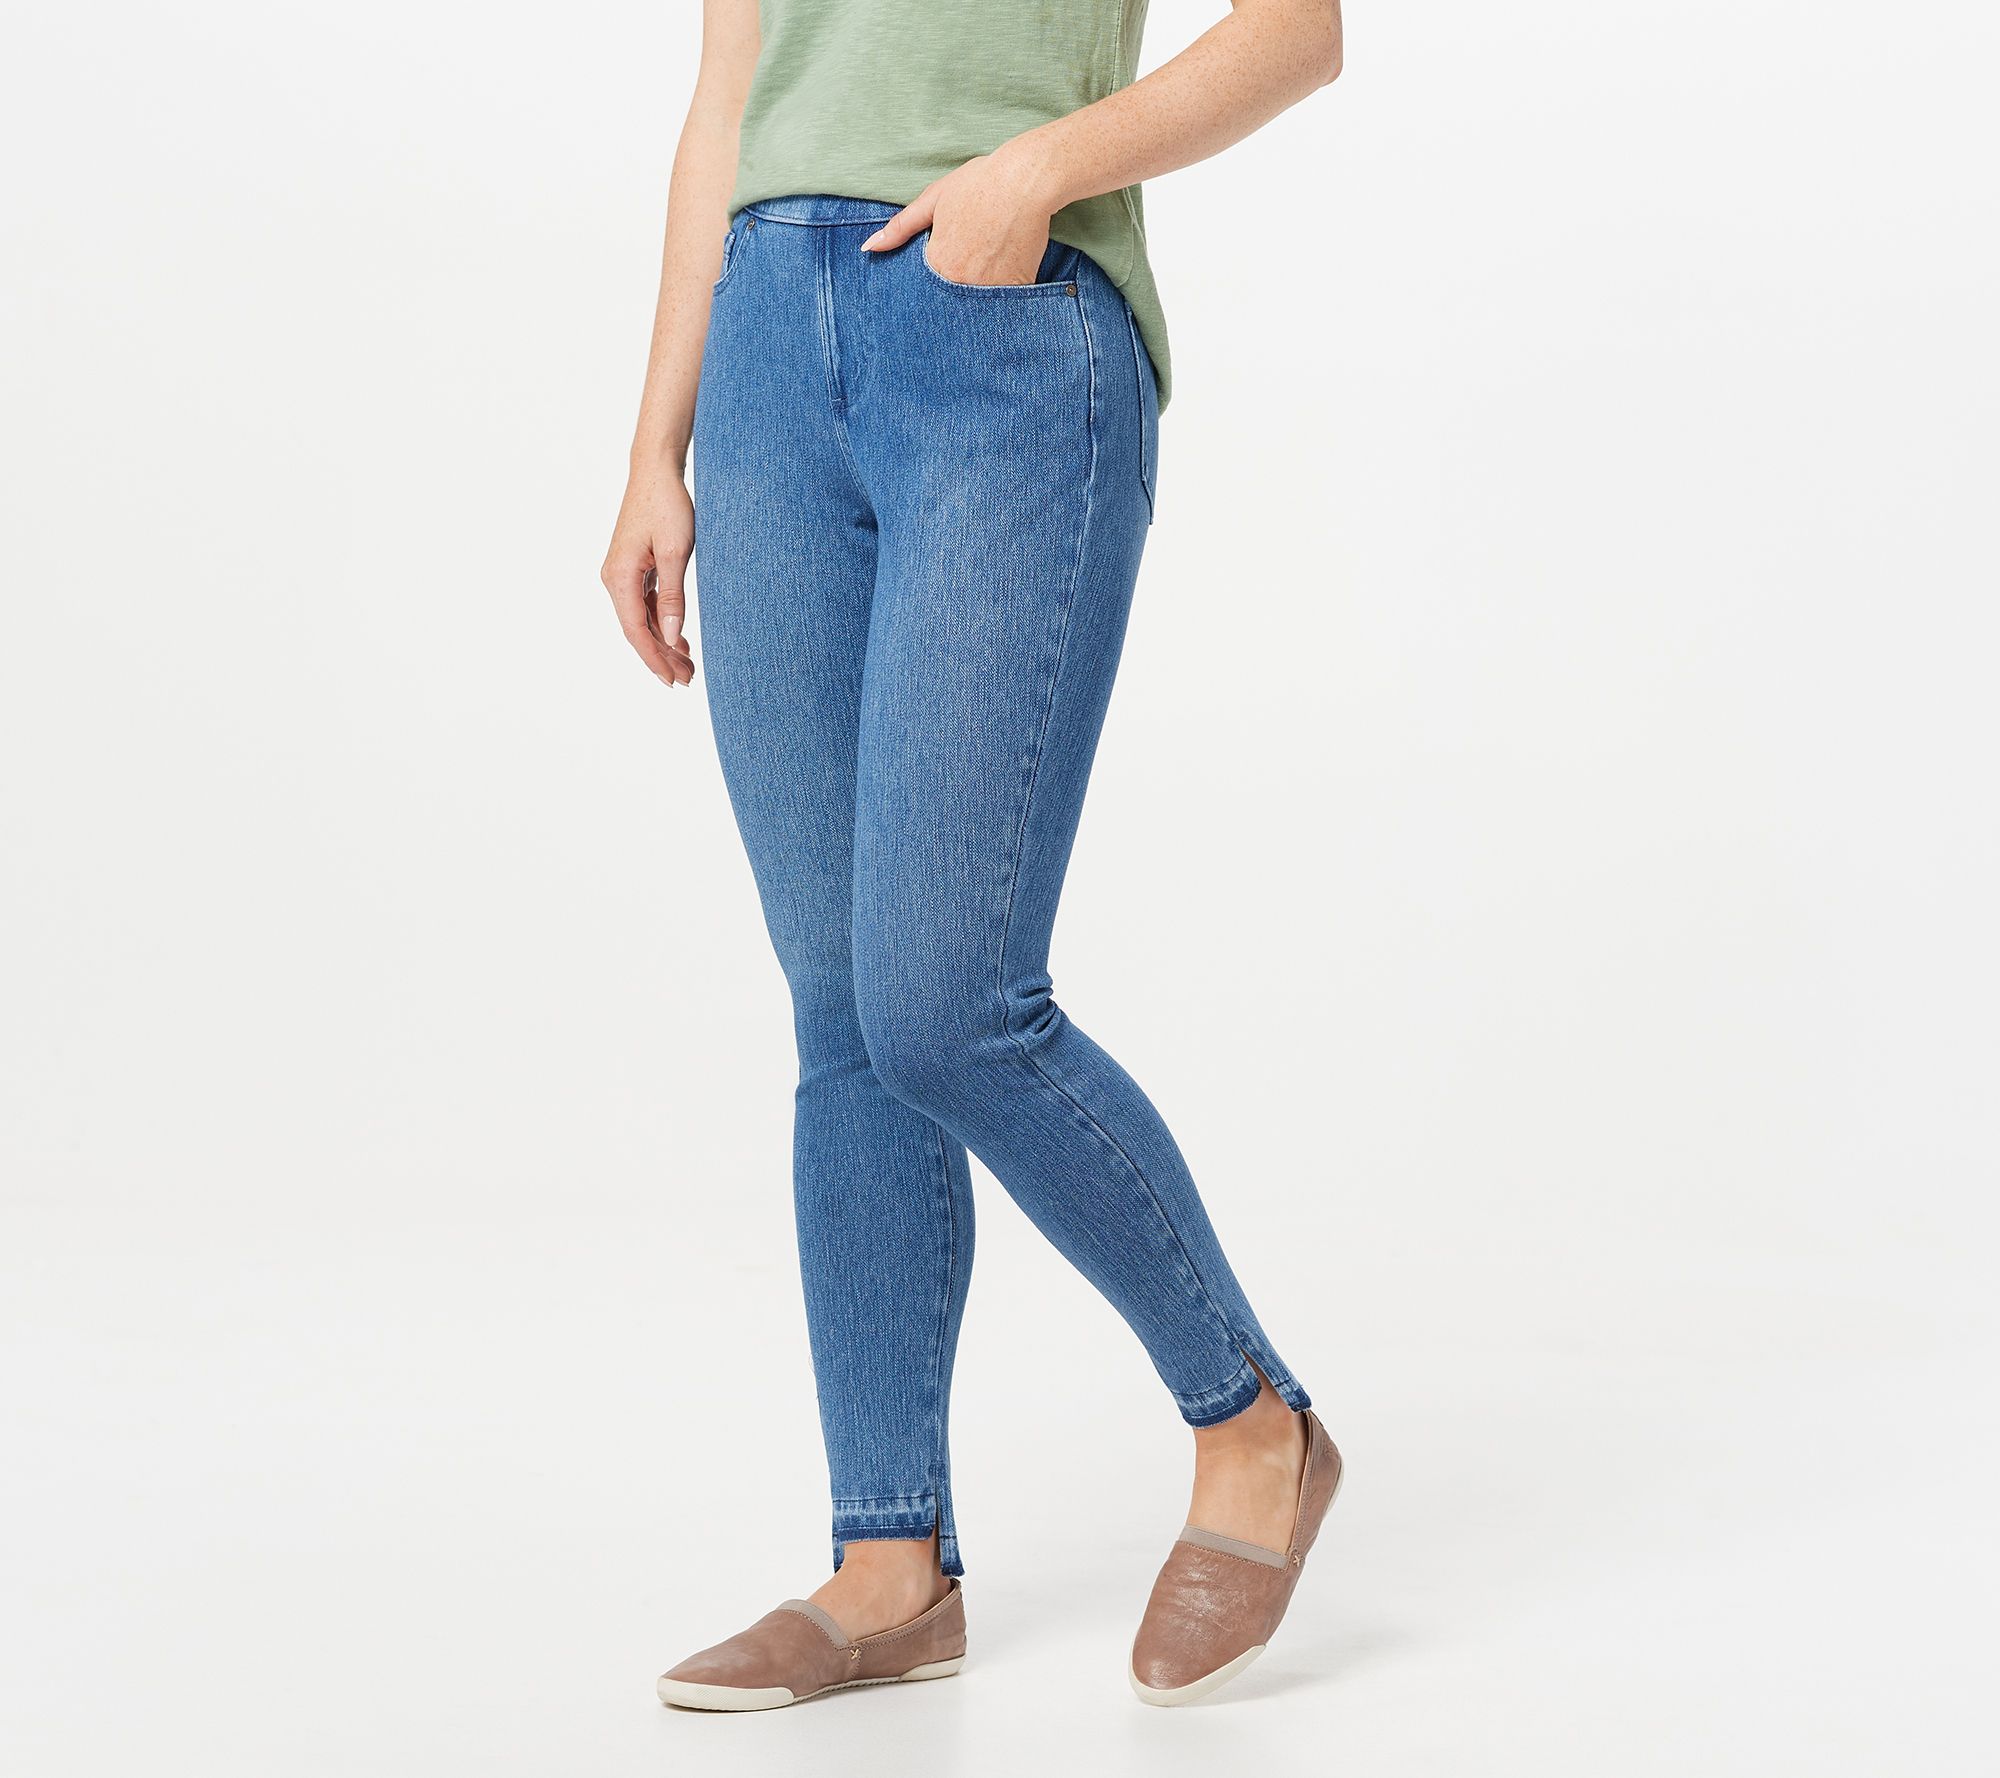 70s wide leg jeans